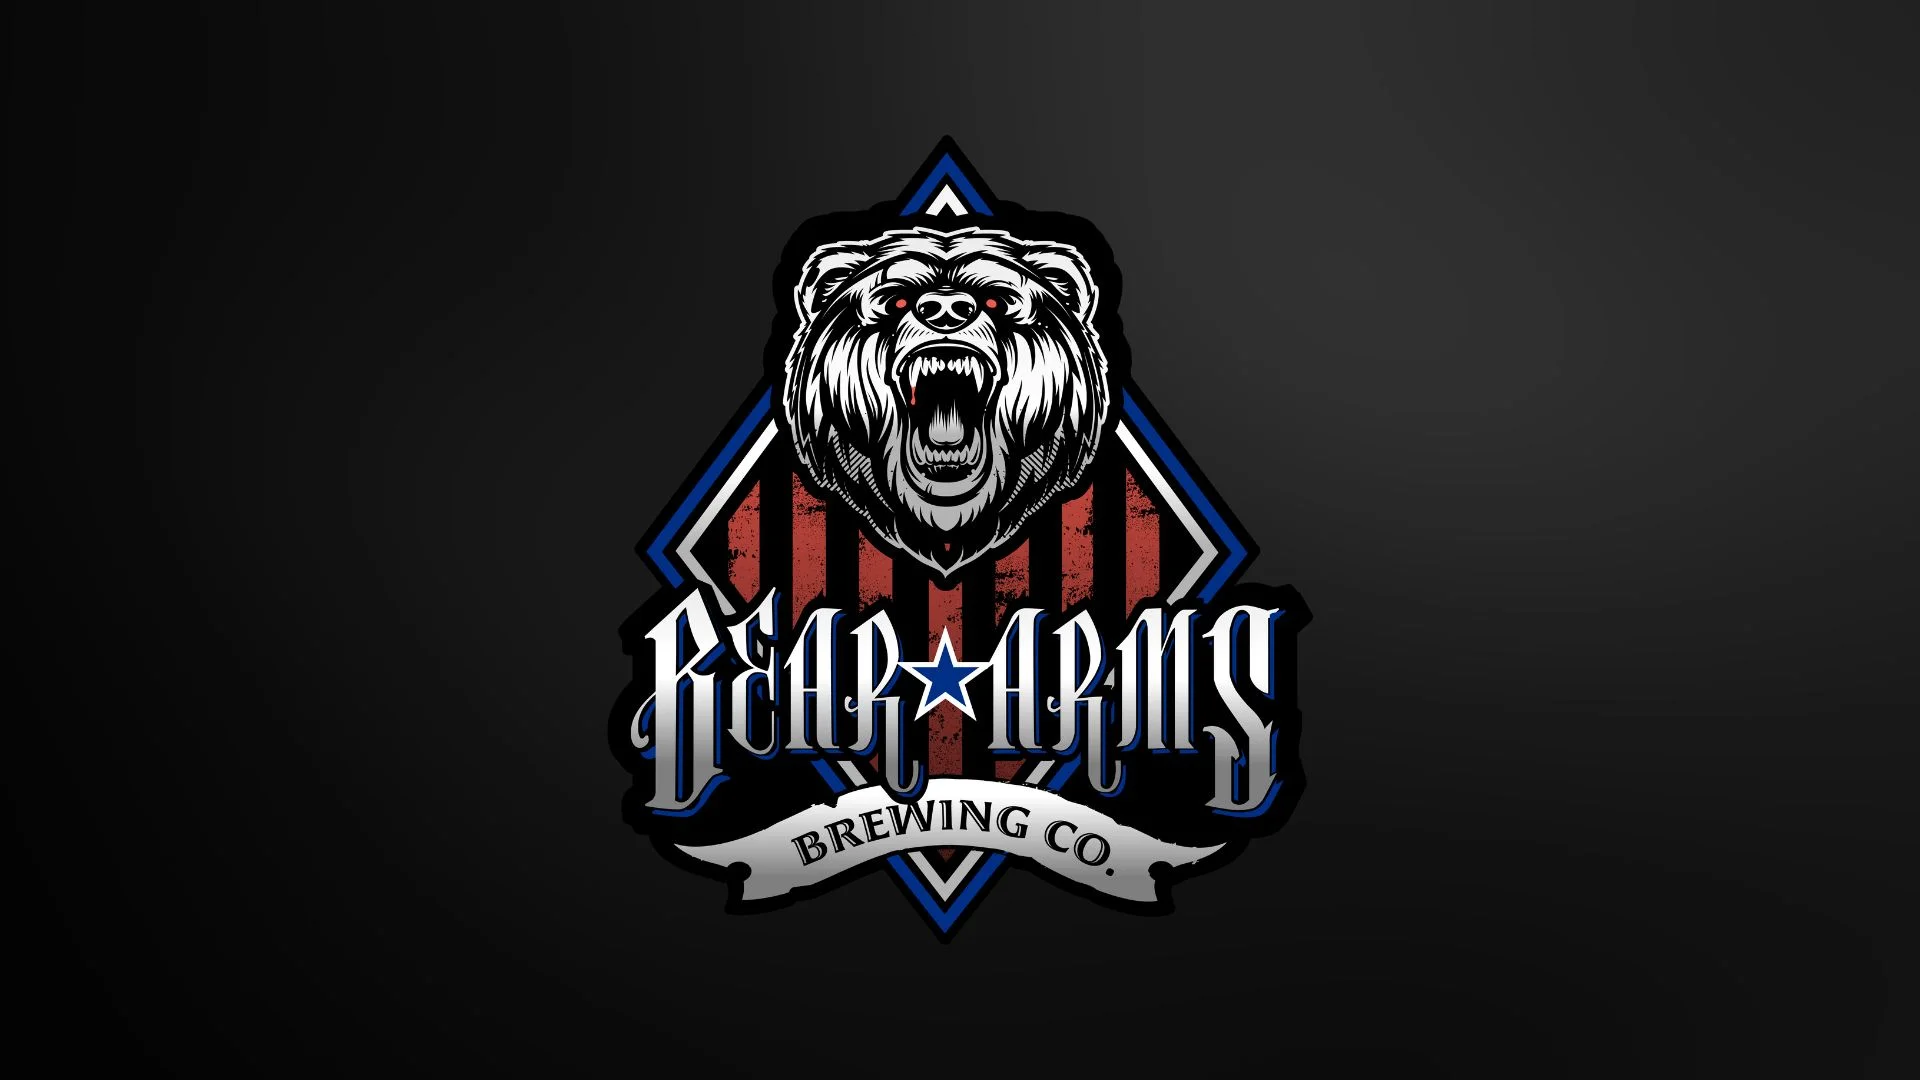 Bear Arms Brewing Company Logo